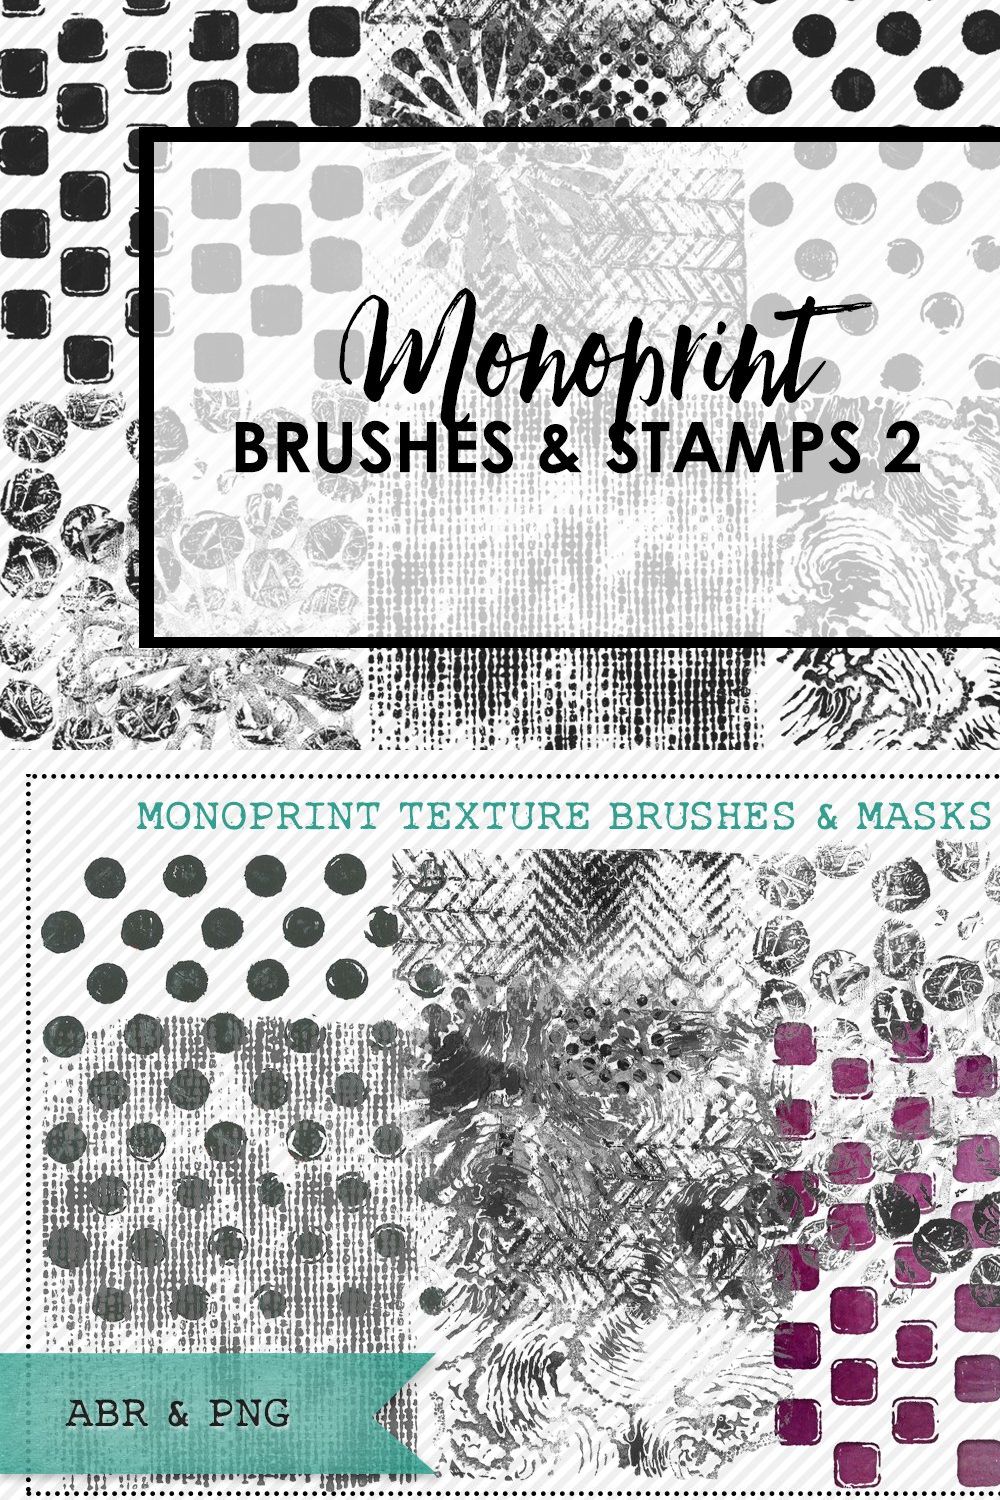 Monoprint Texture Brushes & Masks 2 pinterest preview image.